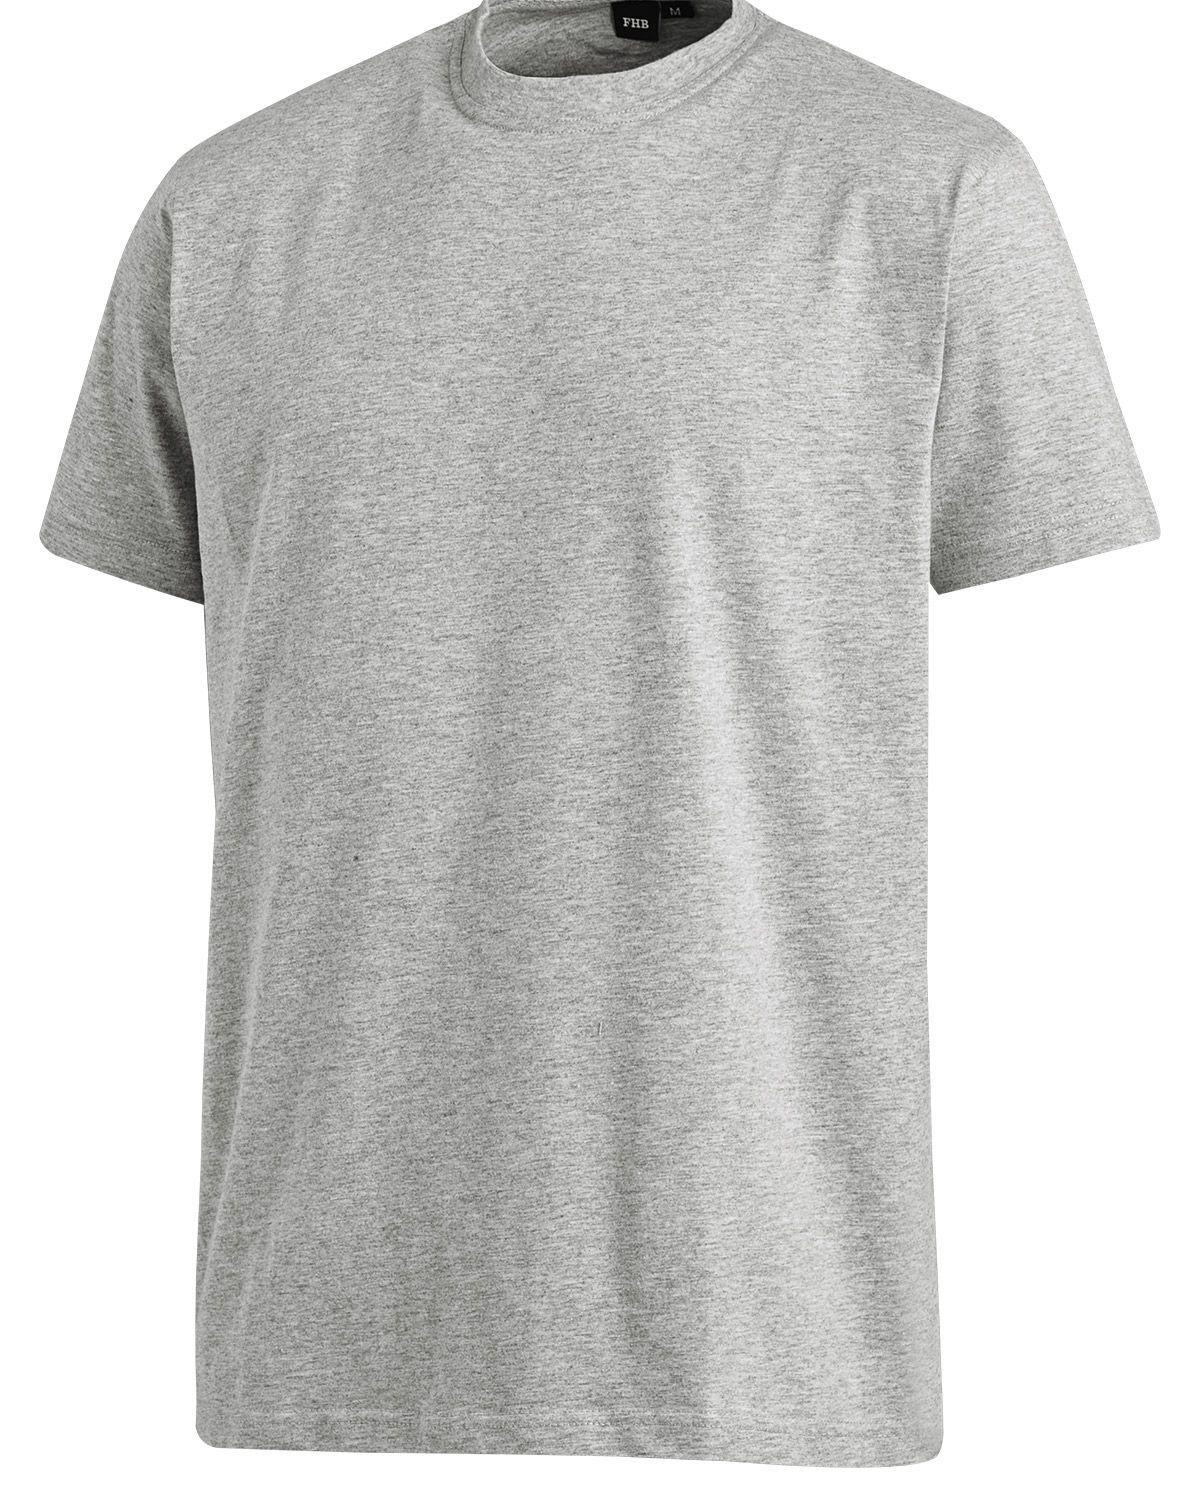 FHB T-Shirt - Jens (Grå, L)